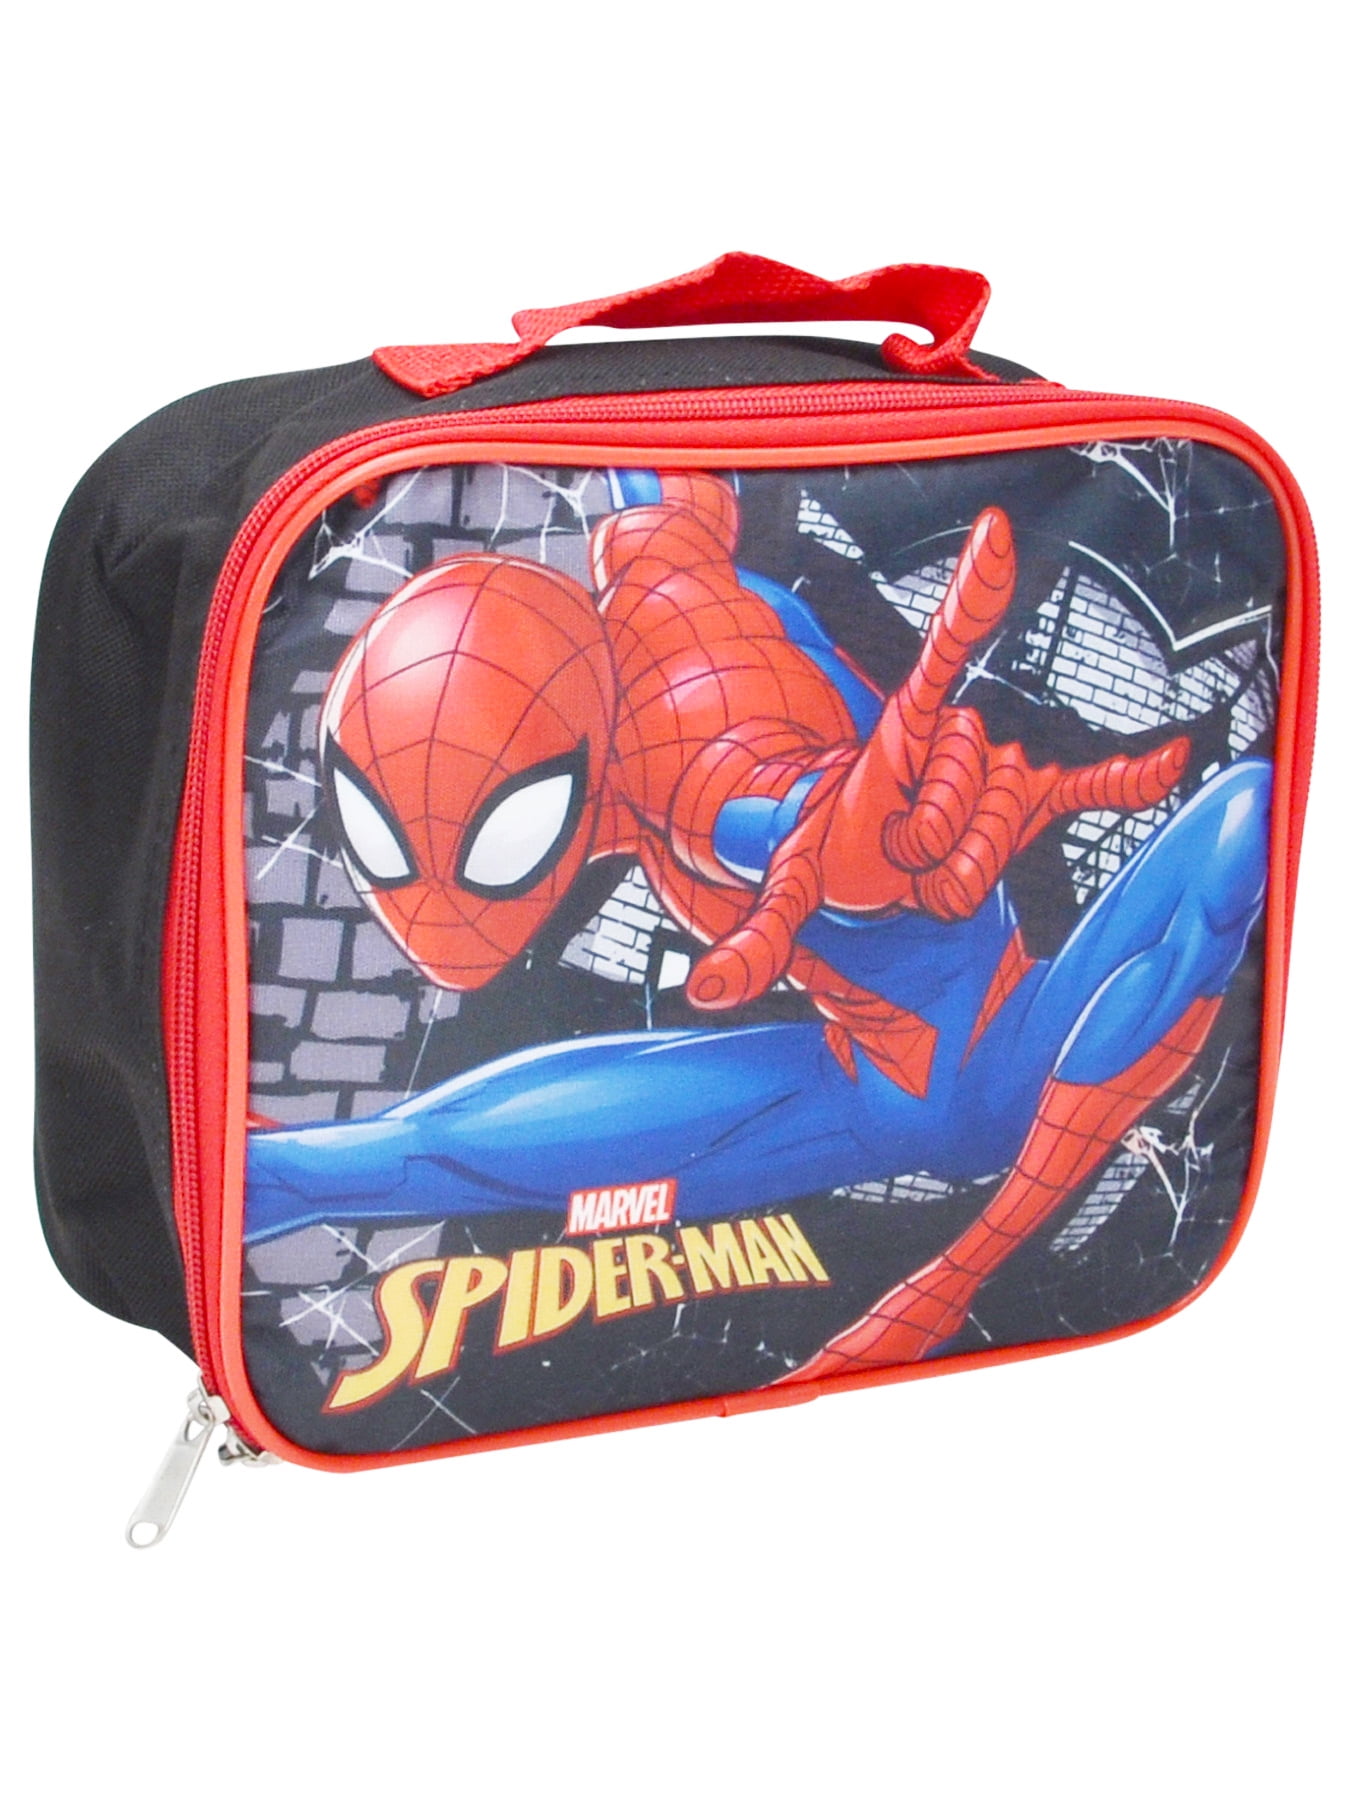 NEW BOYS BLUE RED MARVEL SPIDER MAN LUNCH BOX/BAG SUPERHERO SPIDERMAN ZIPPED 